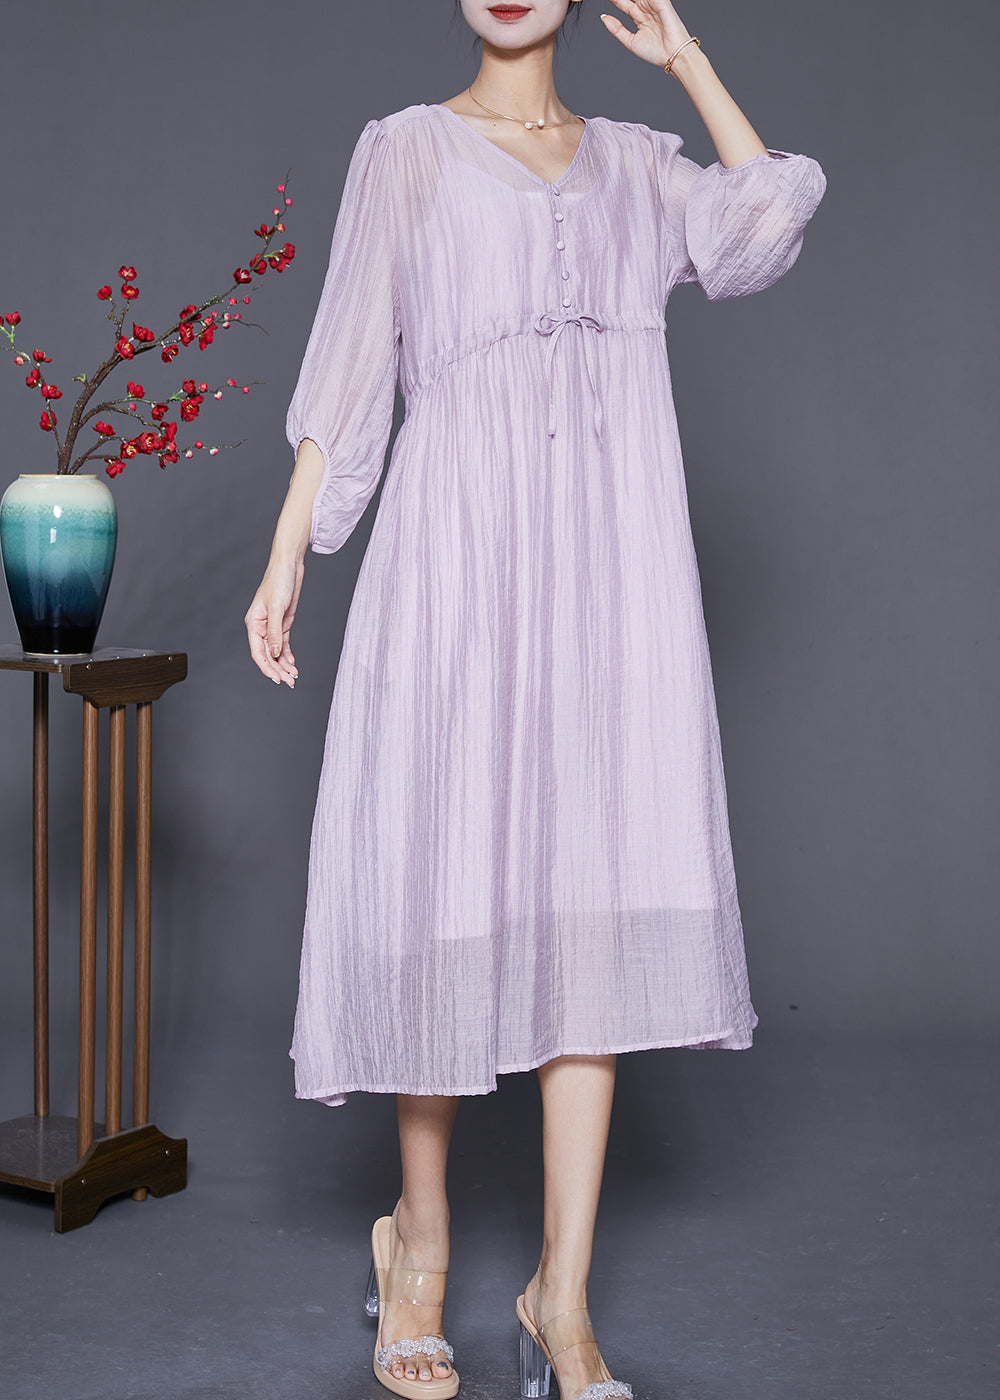 Diy Light Purple V Neck Cinched Silk Cotton Long Dresses Summer Ada Fashion